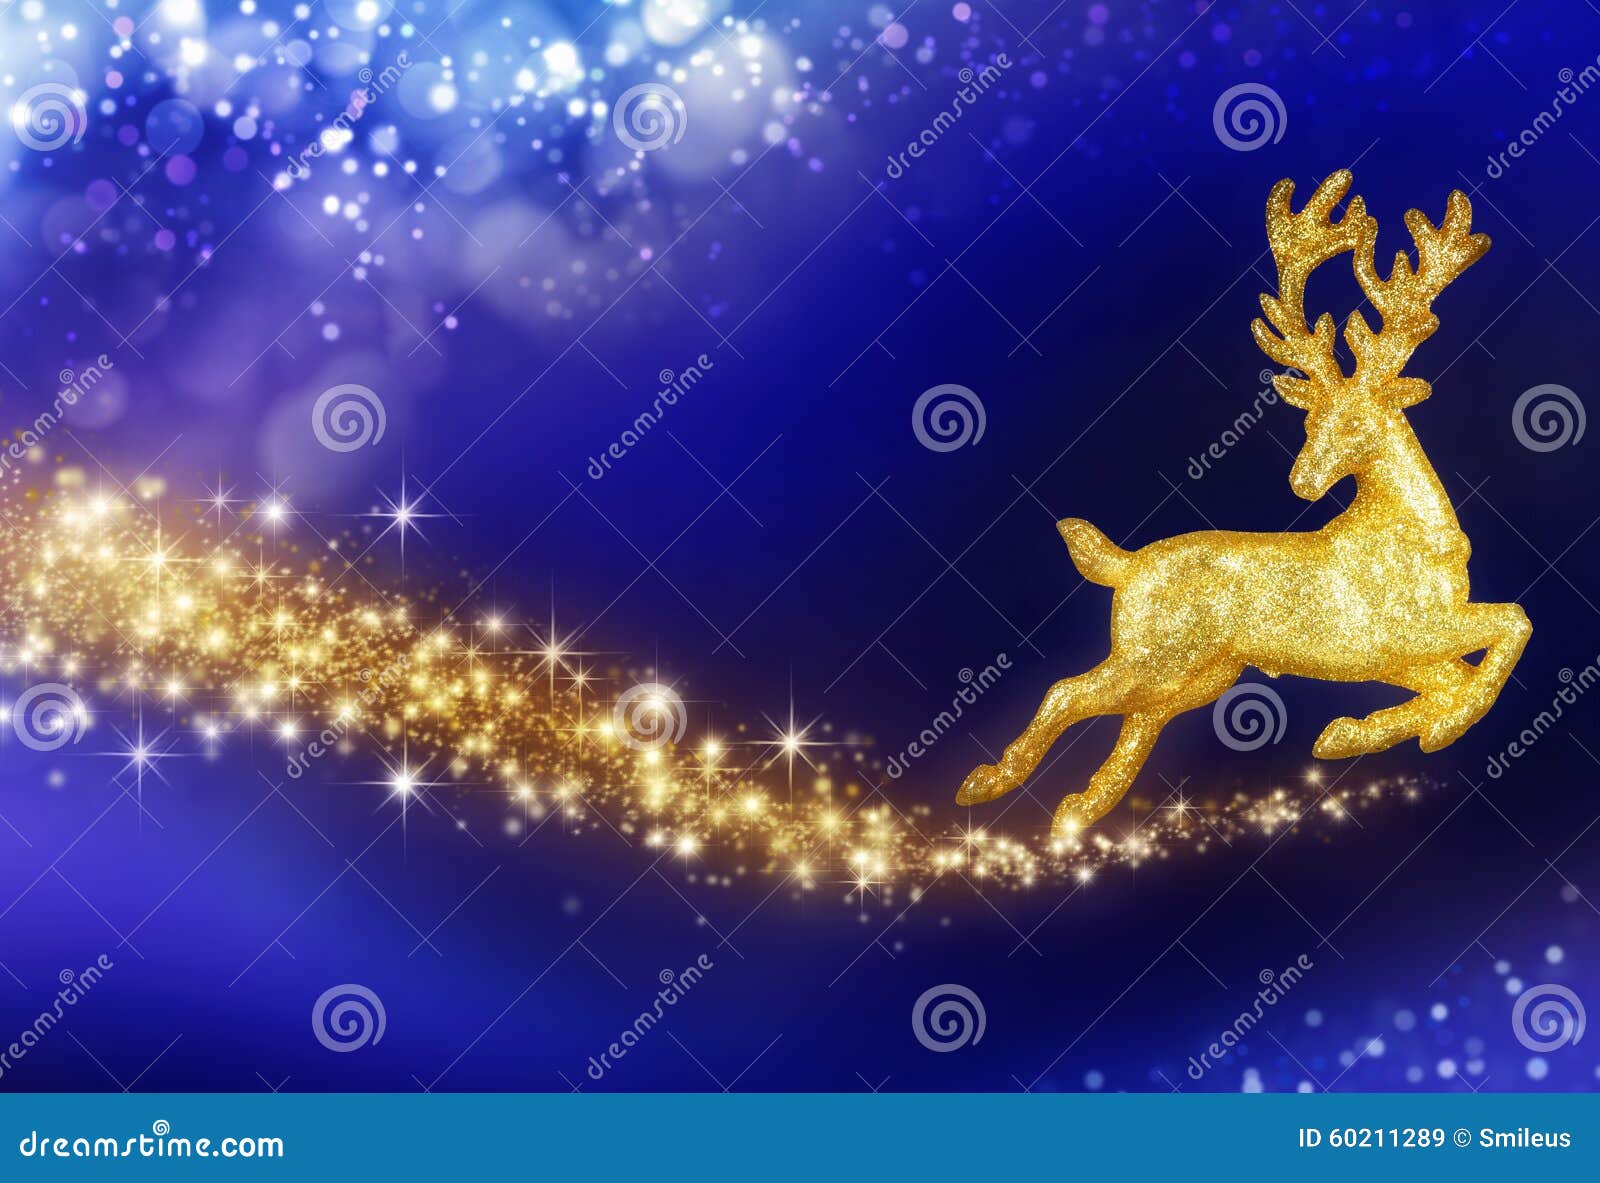 christmas fantasy with golden reindeer